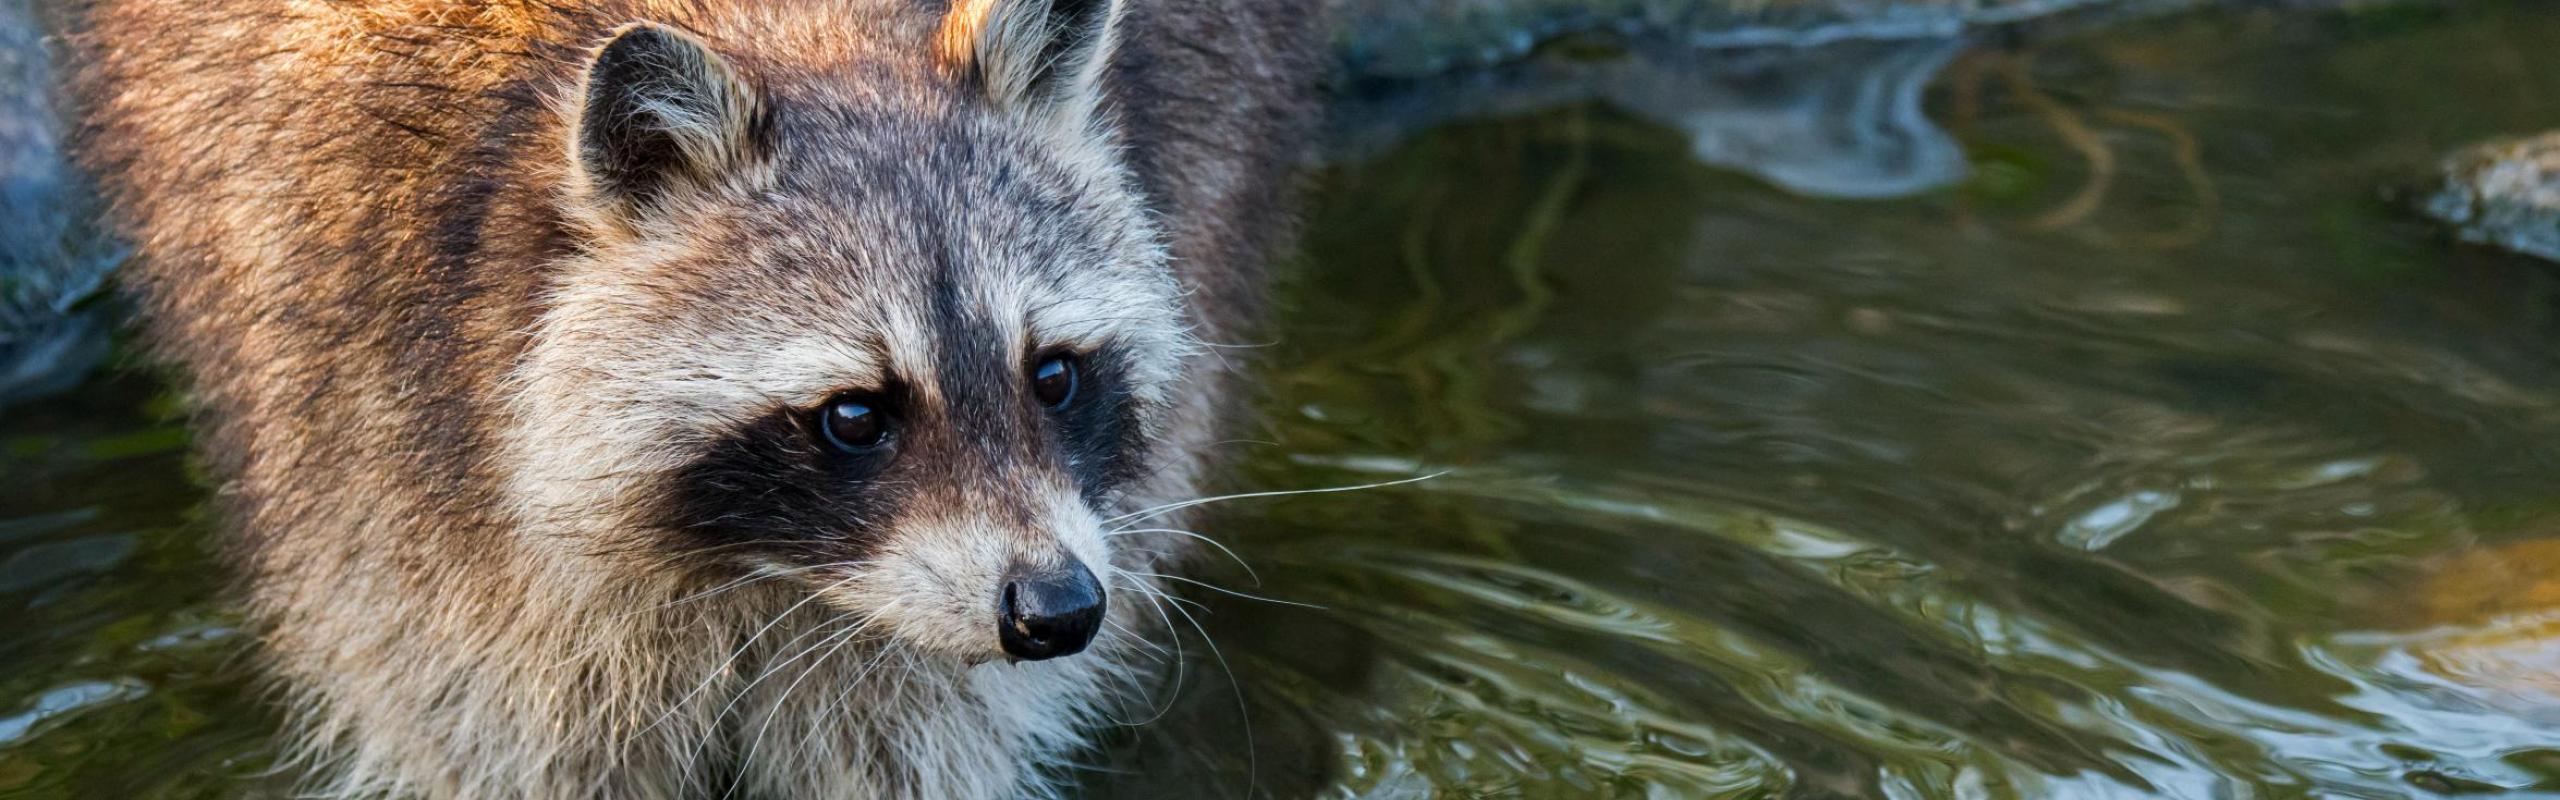 raccoon in pond